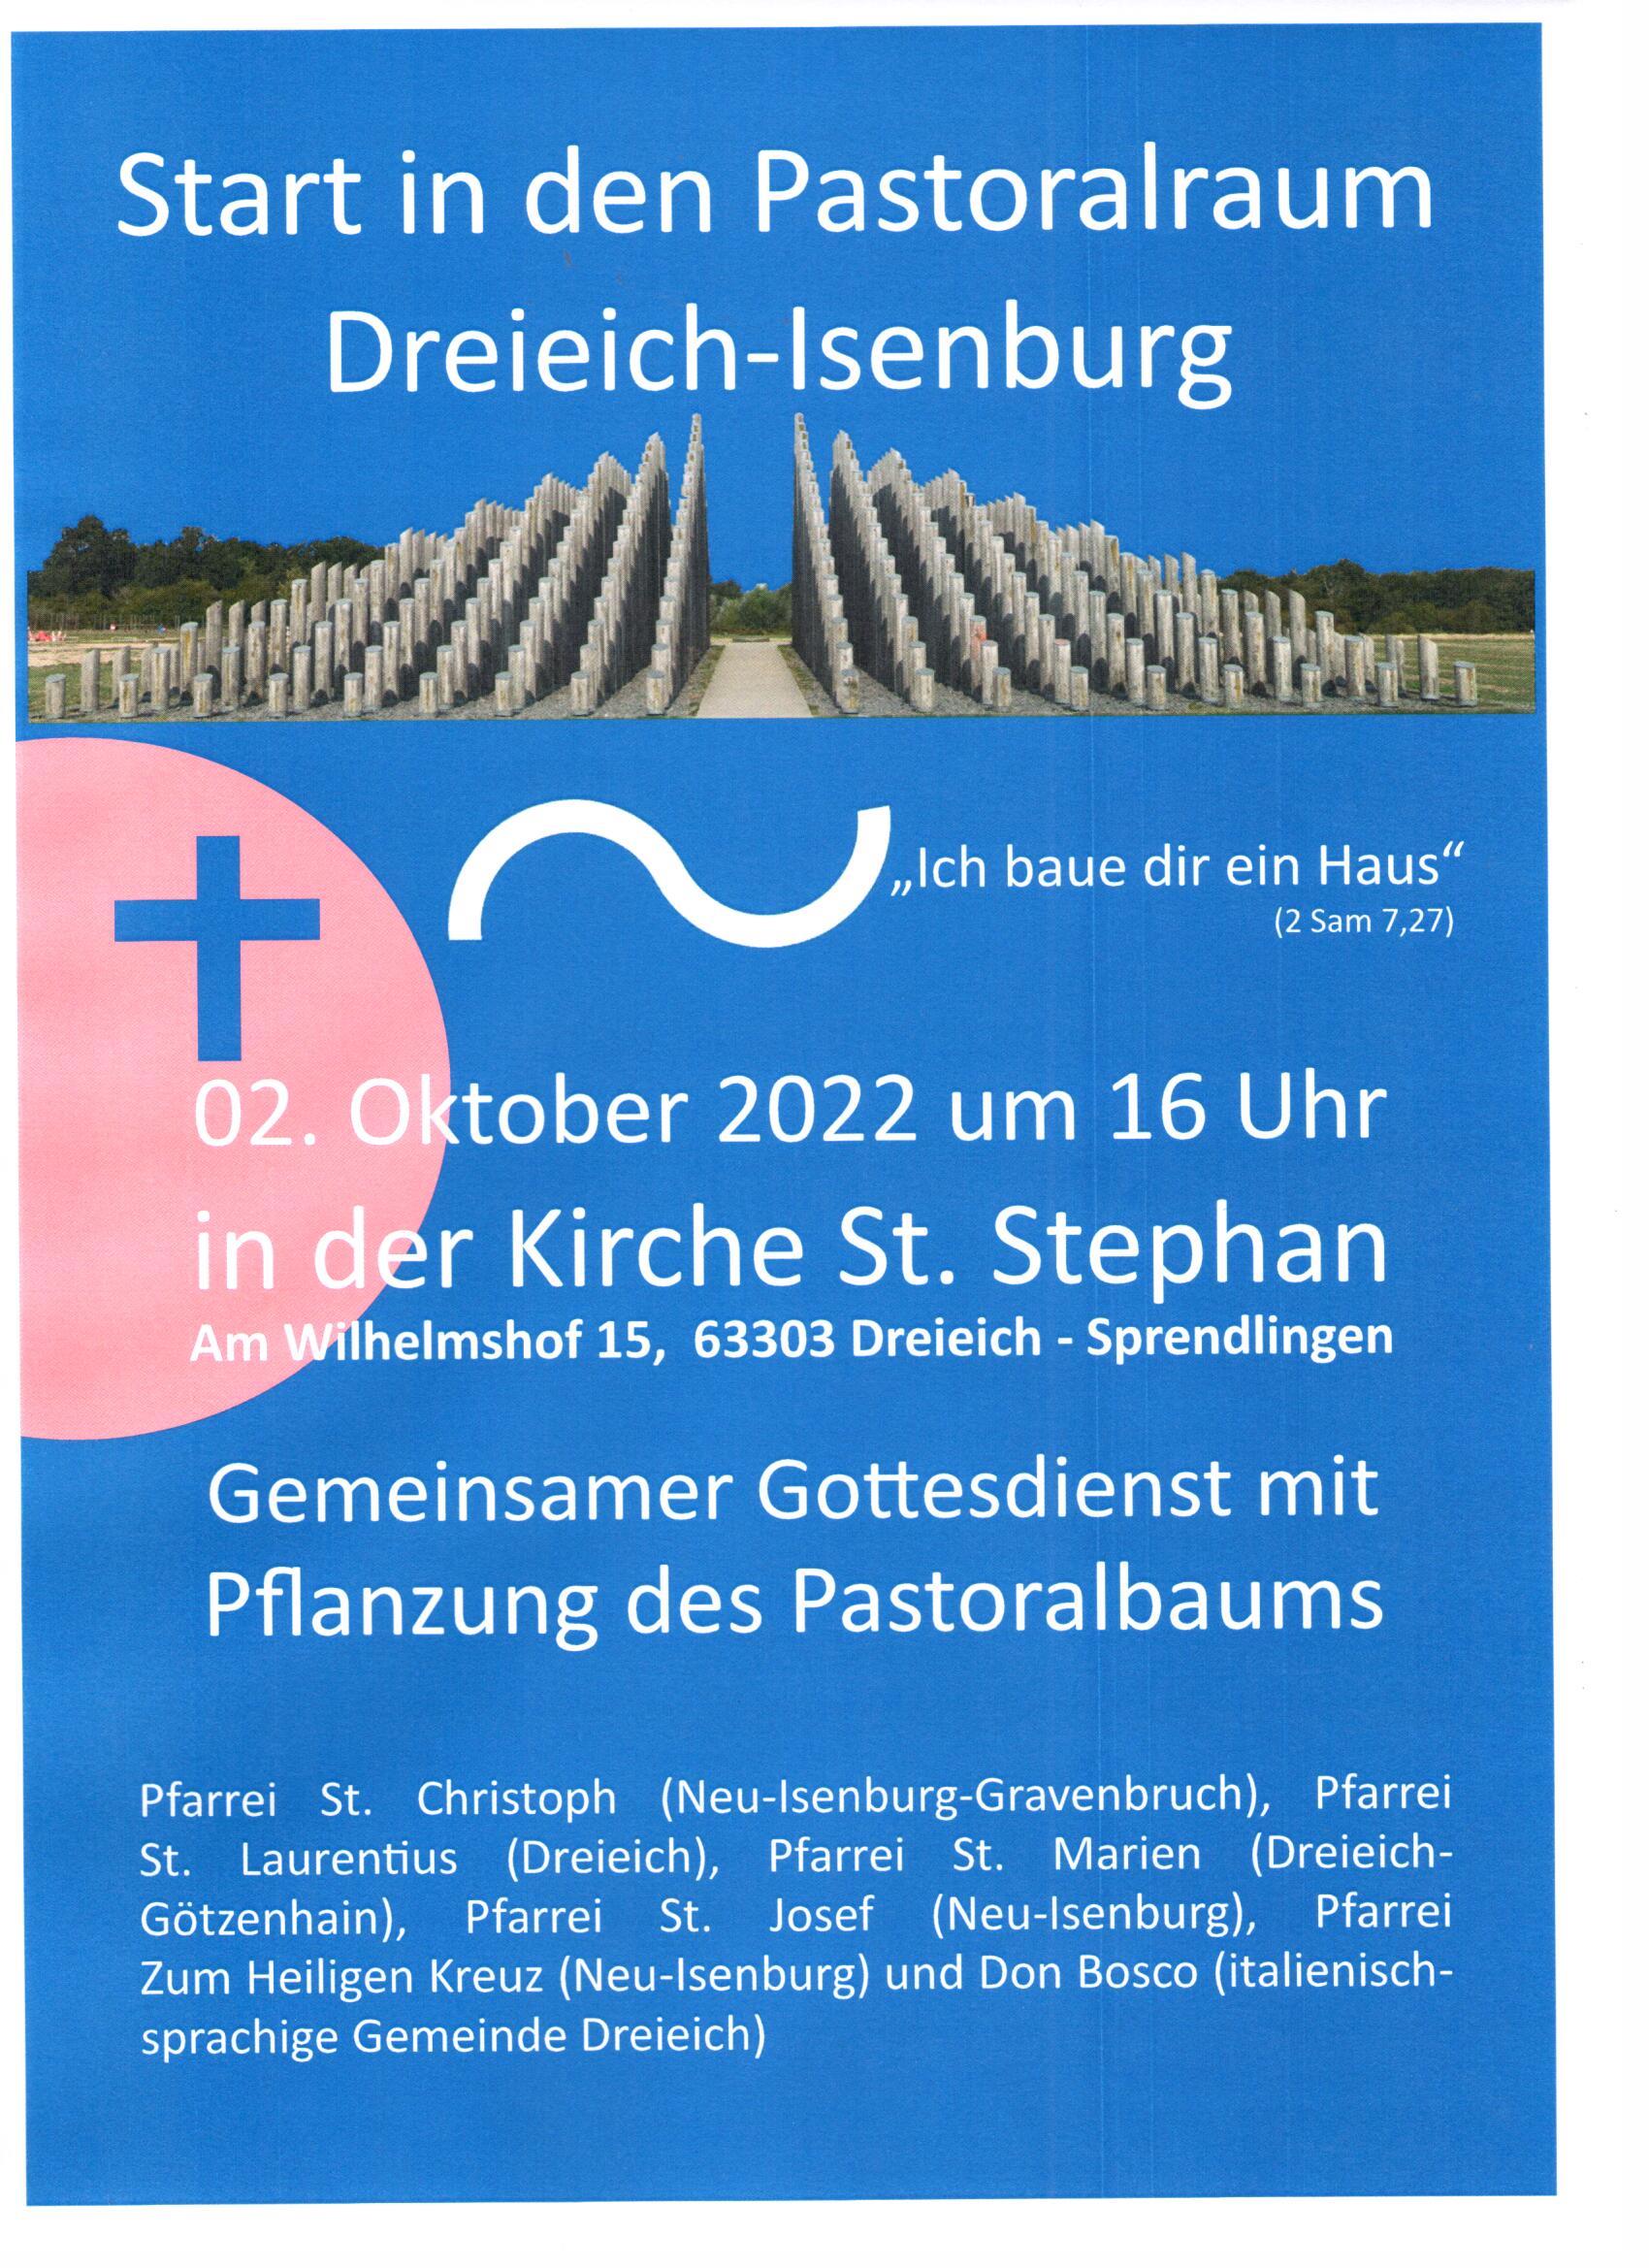 Start Pastoralraum (c) Pastoralraum Dreieich-Isenburg